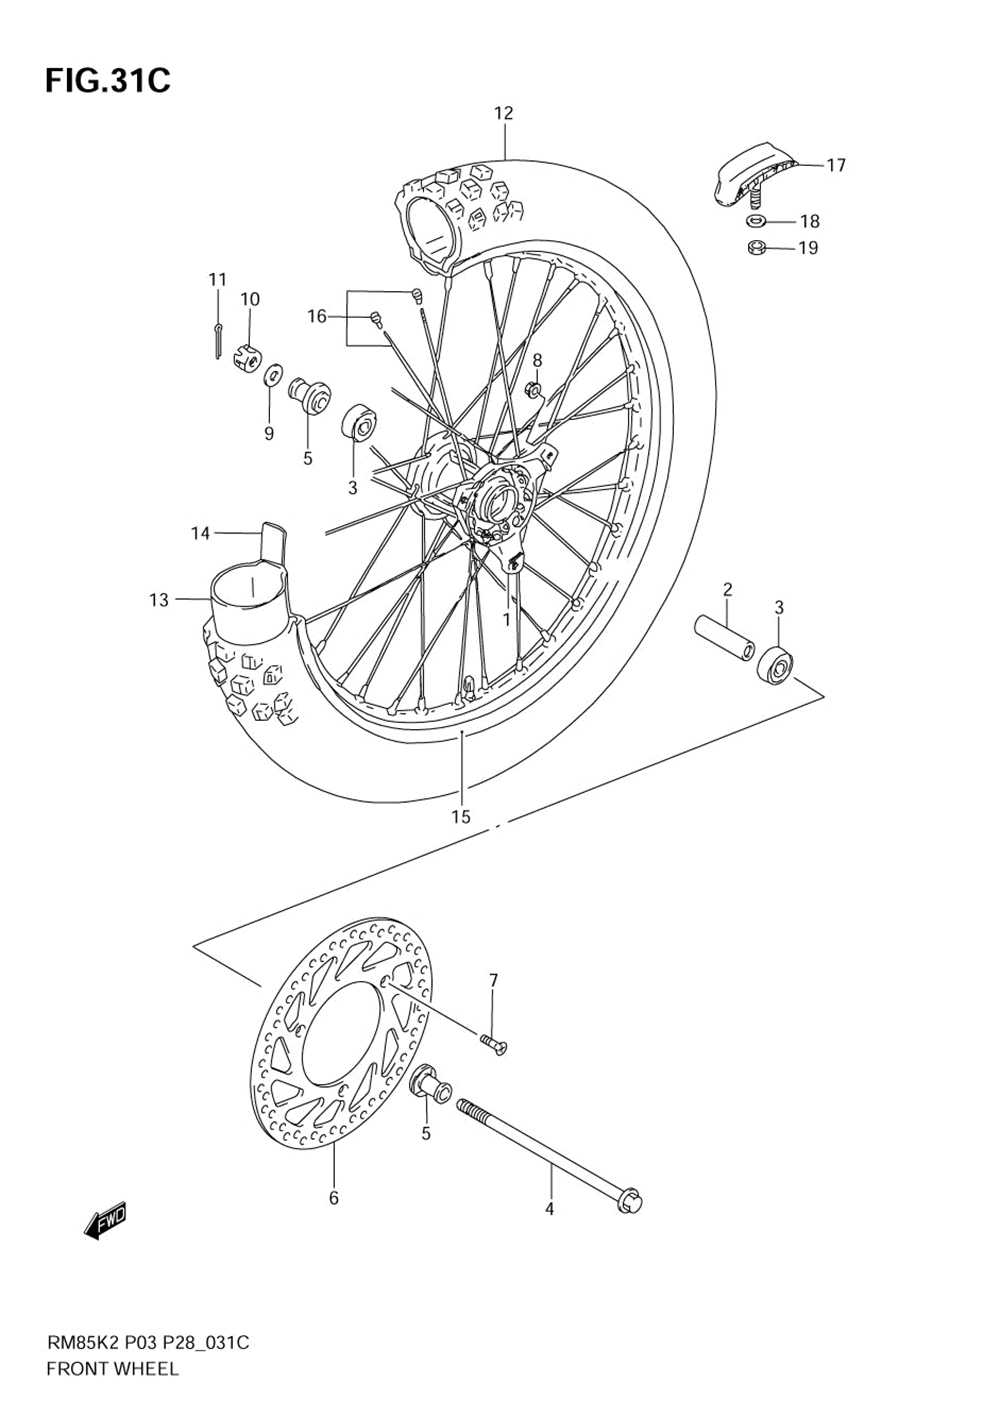 Front wheel (rm85lk5_lk6)